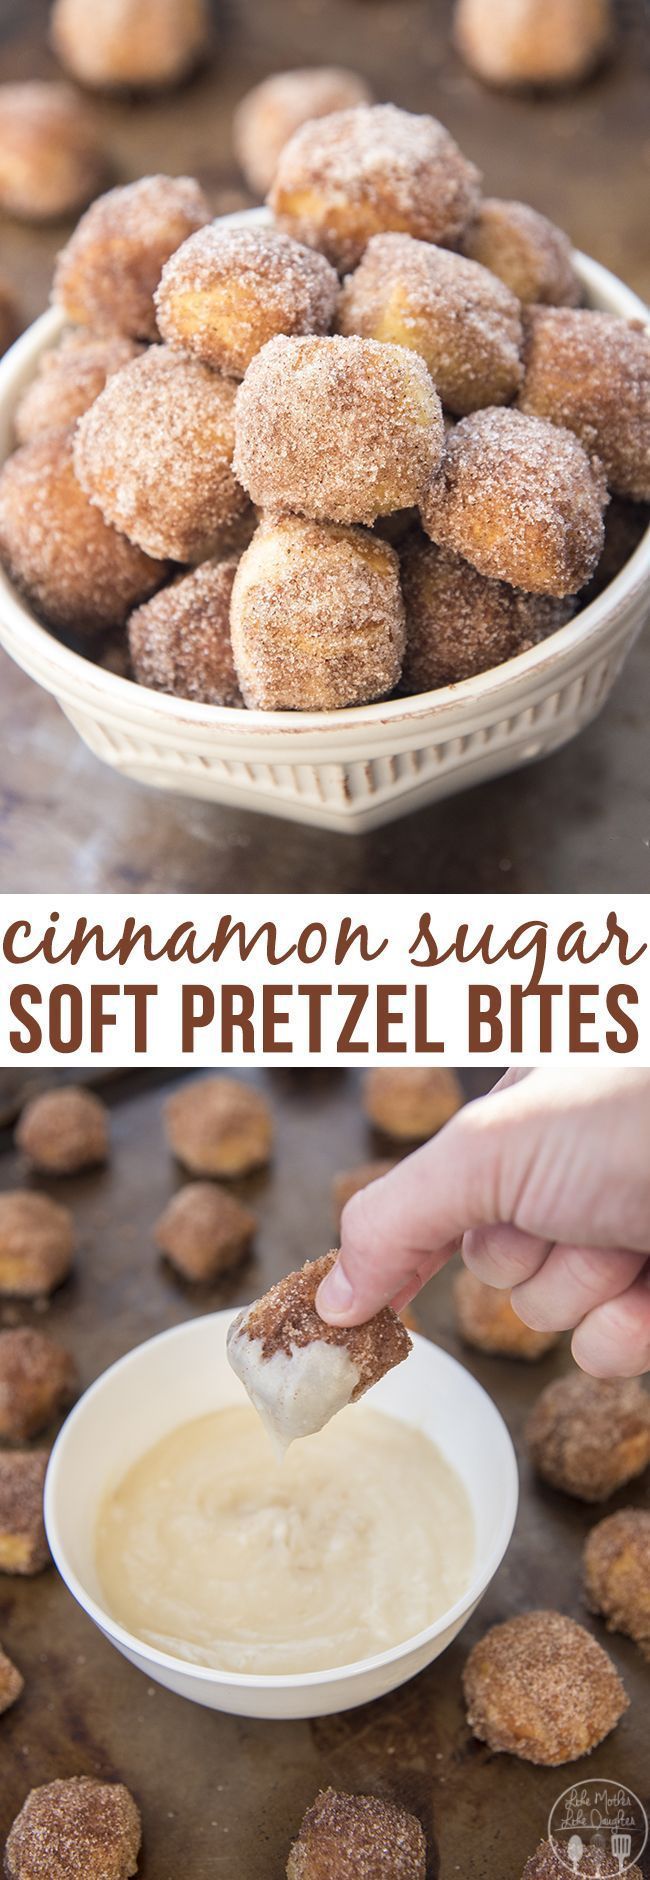 Cinnamon Sugar Soft Pretzel Bites – These cinnamon sugar sbites are perfect soft pretzels with a chewy pretzel crust coated in